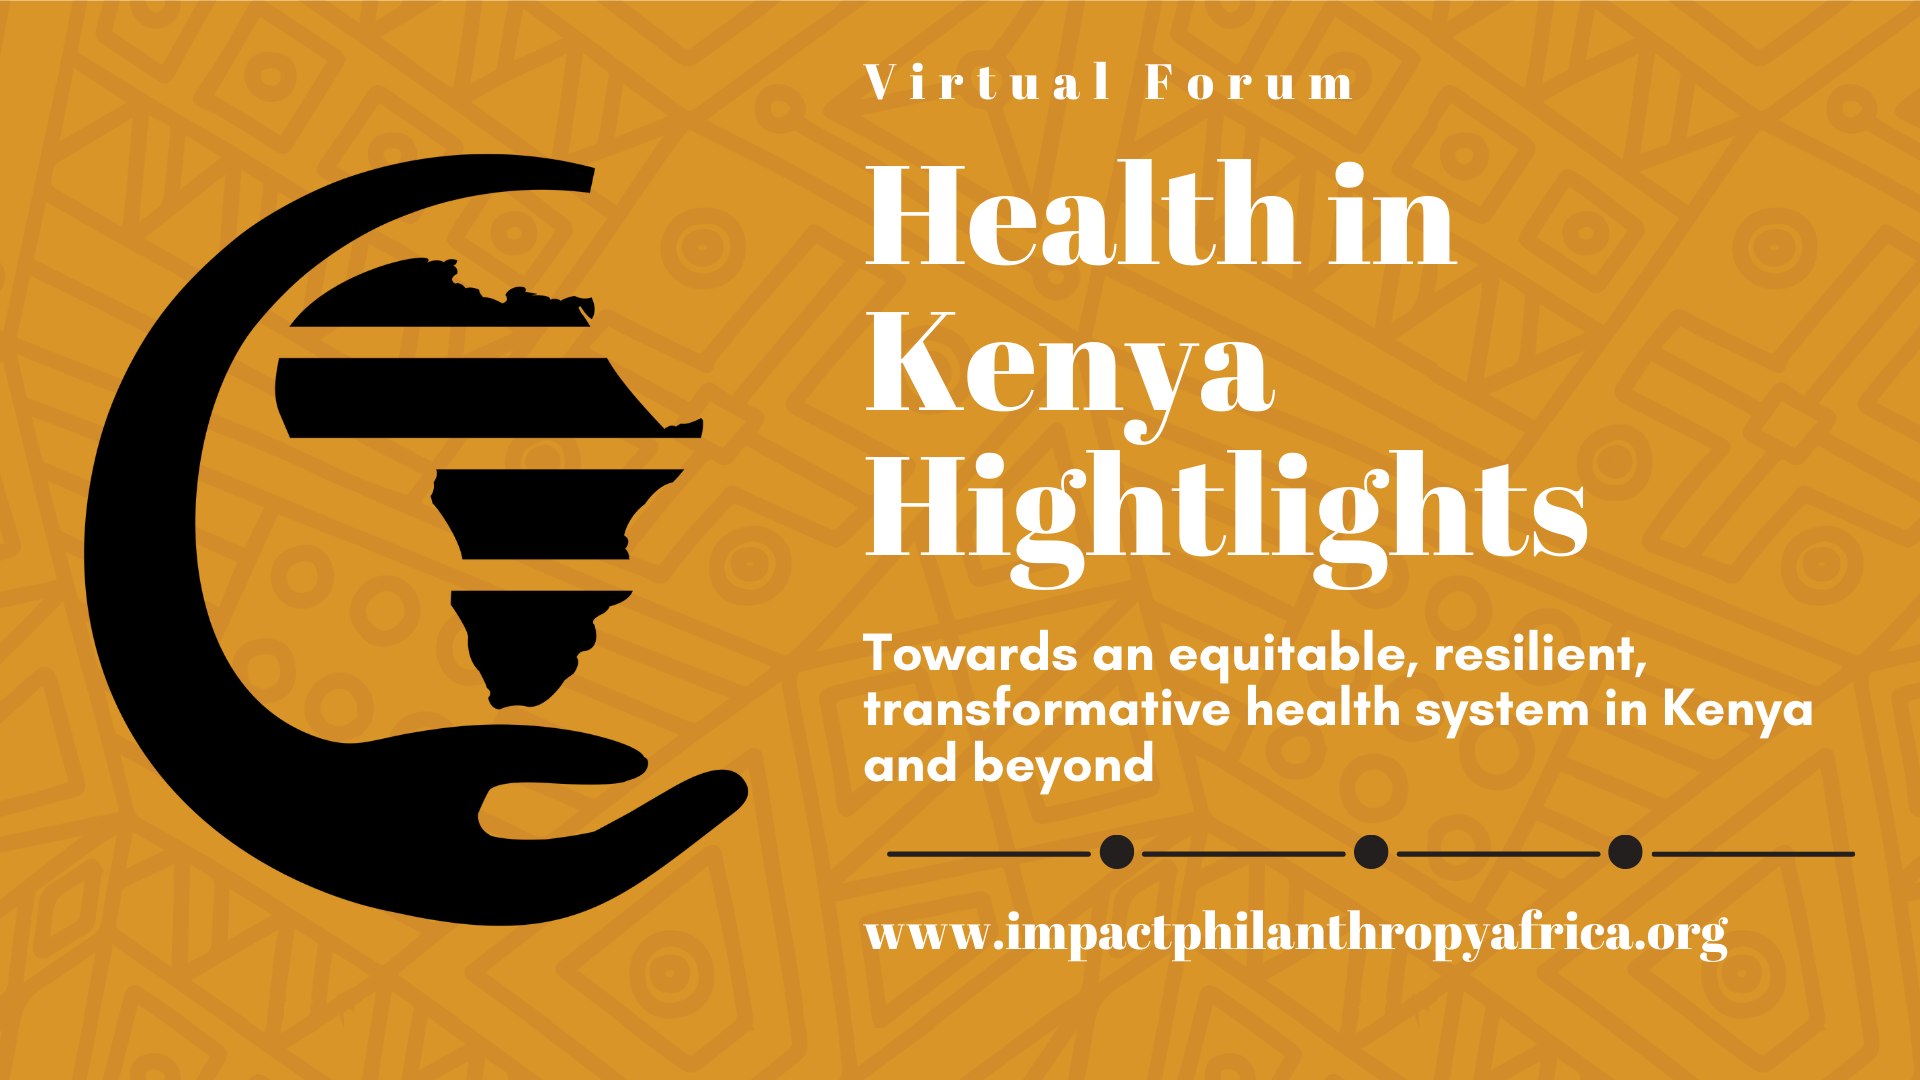 Health in Kenya Virtual Forum Highlights